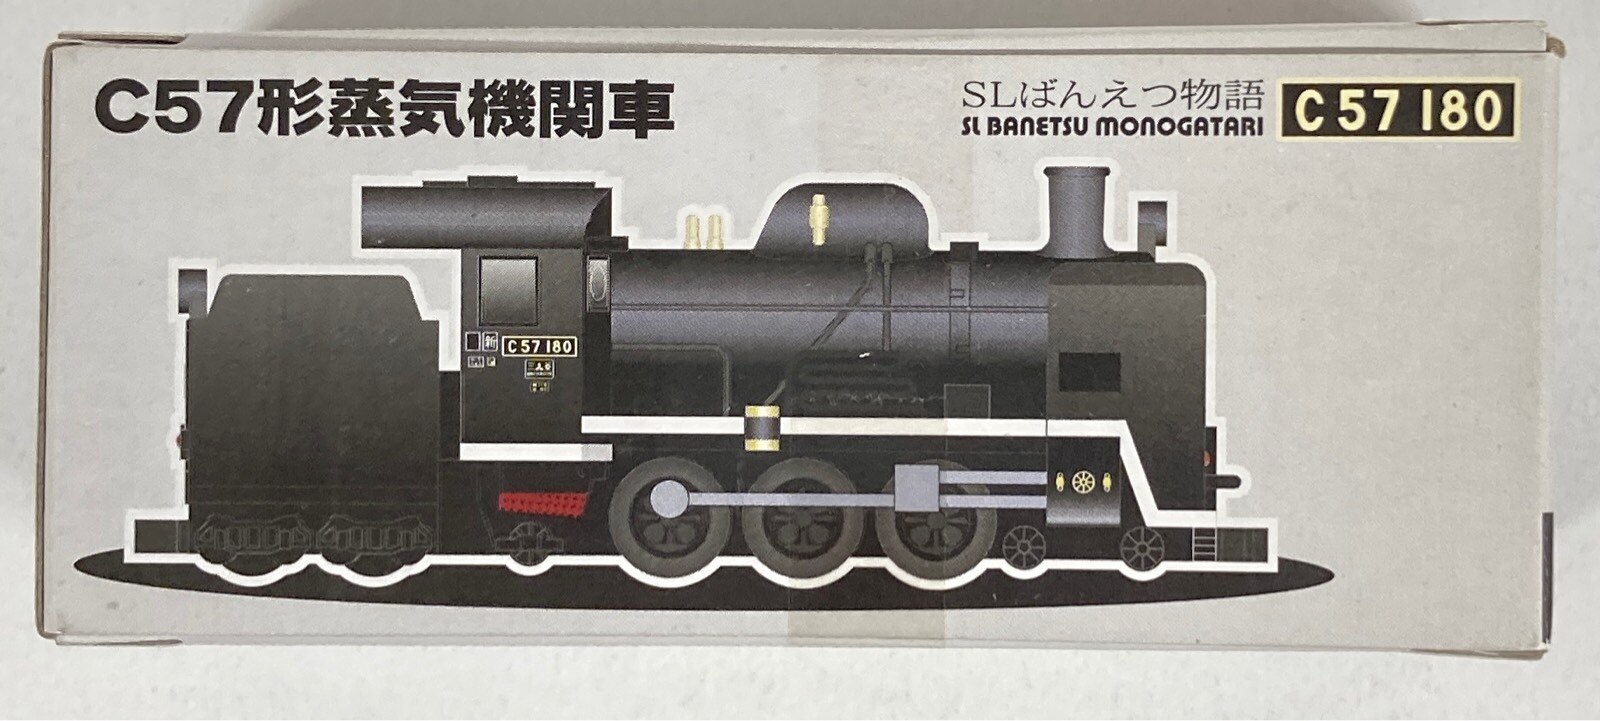 KB雑貨 ししゅうタグ C57形蒸気機関車 SLばんえつ物語 KBKBTG13003